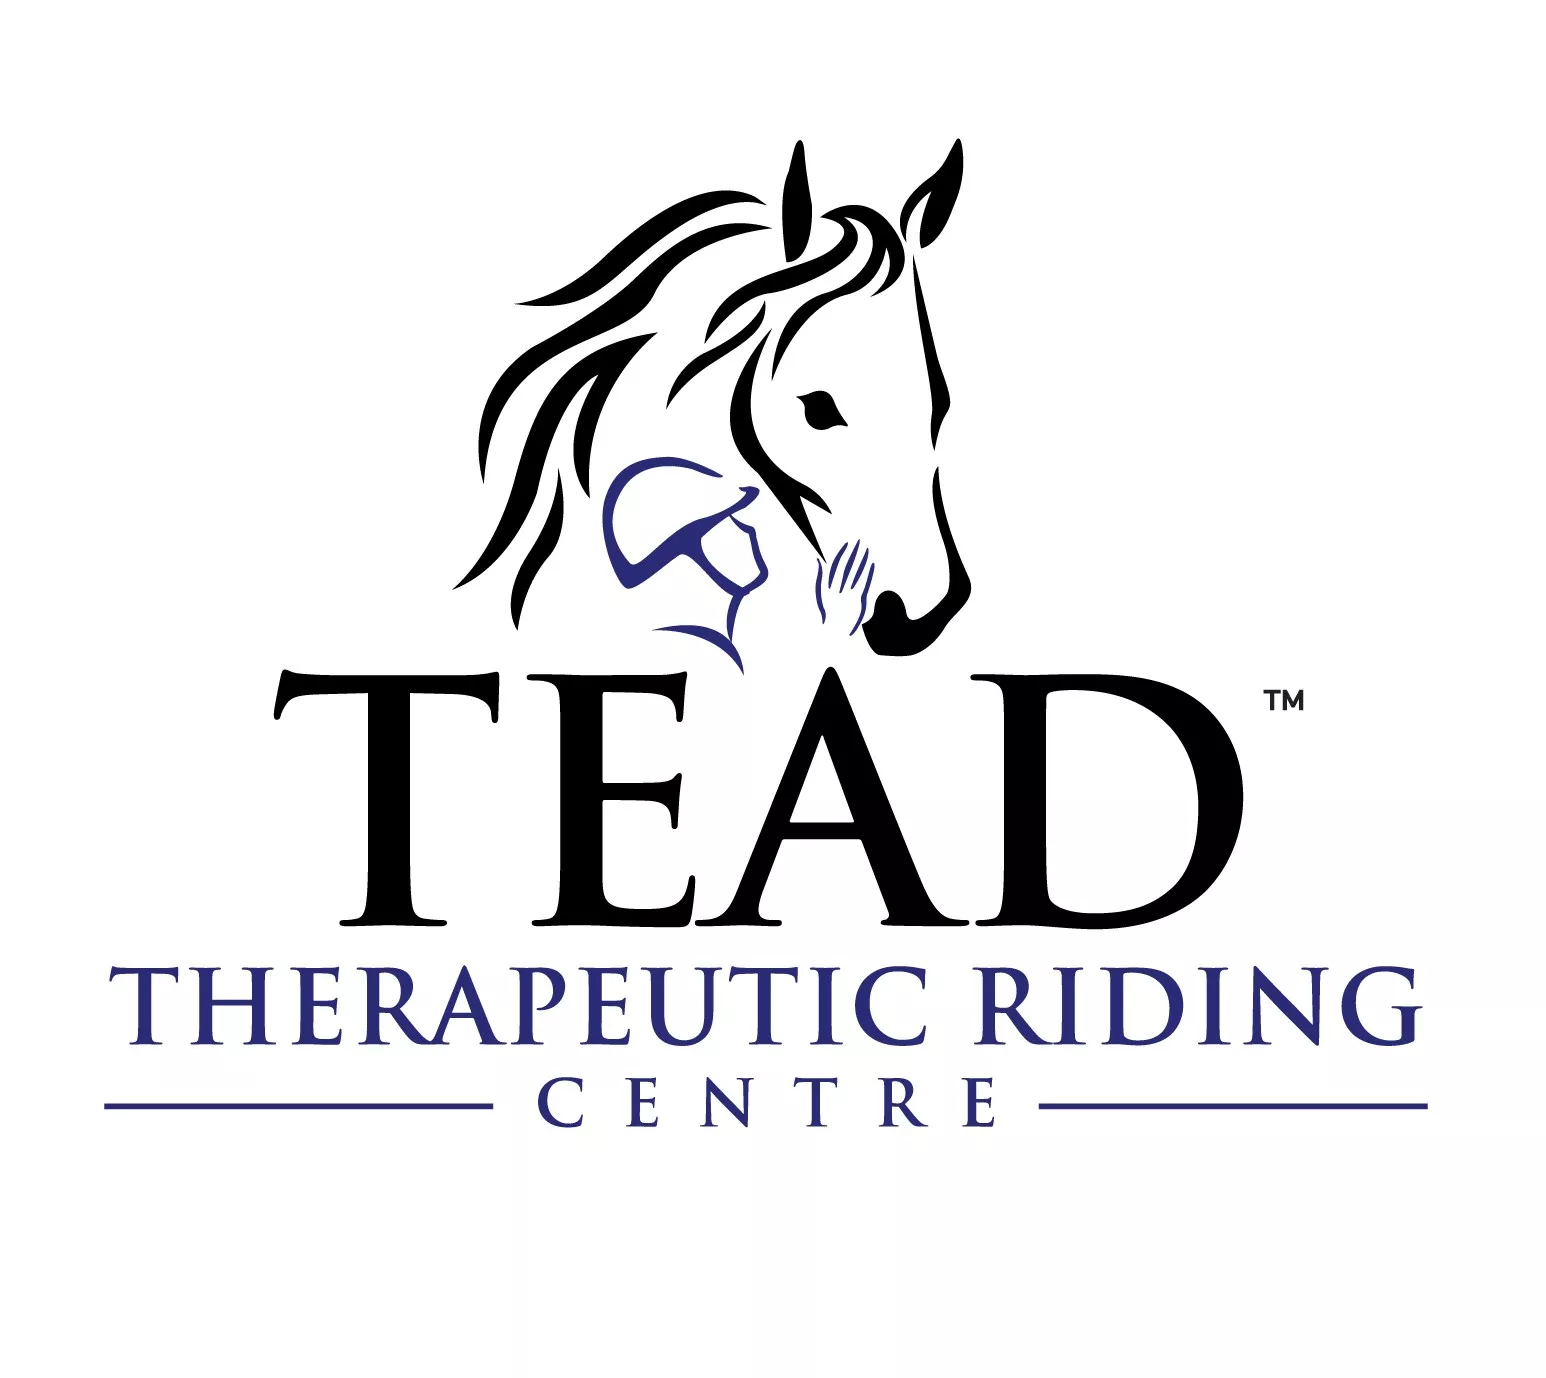 New TEAD logo